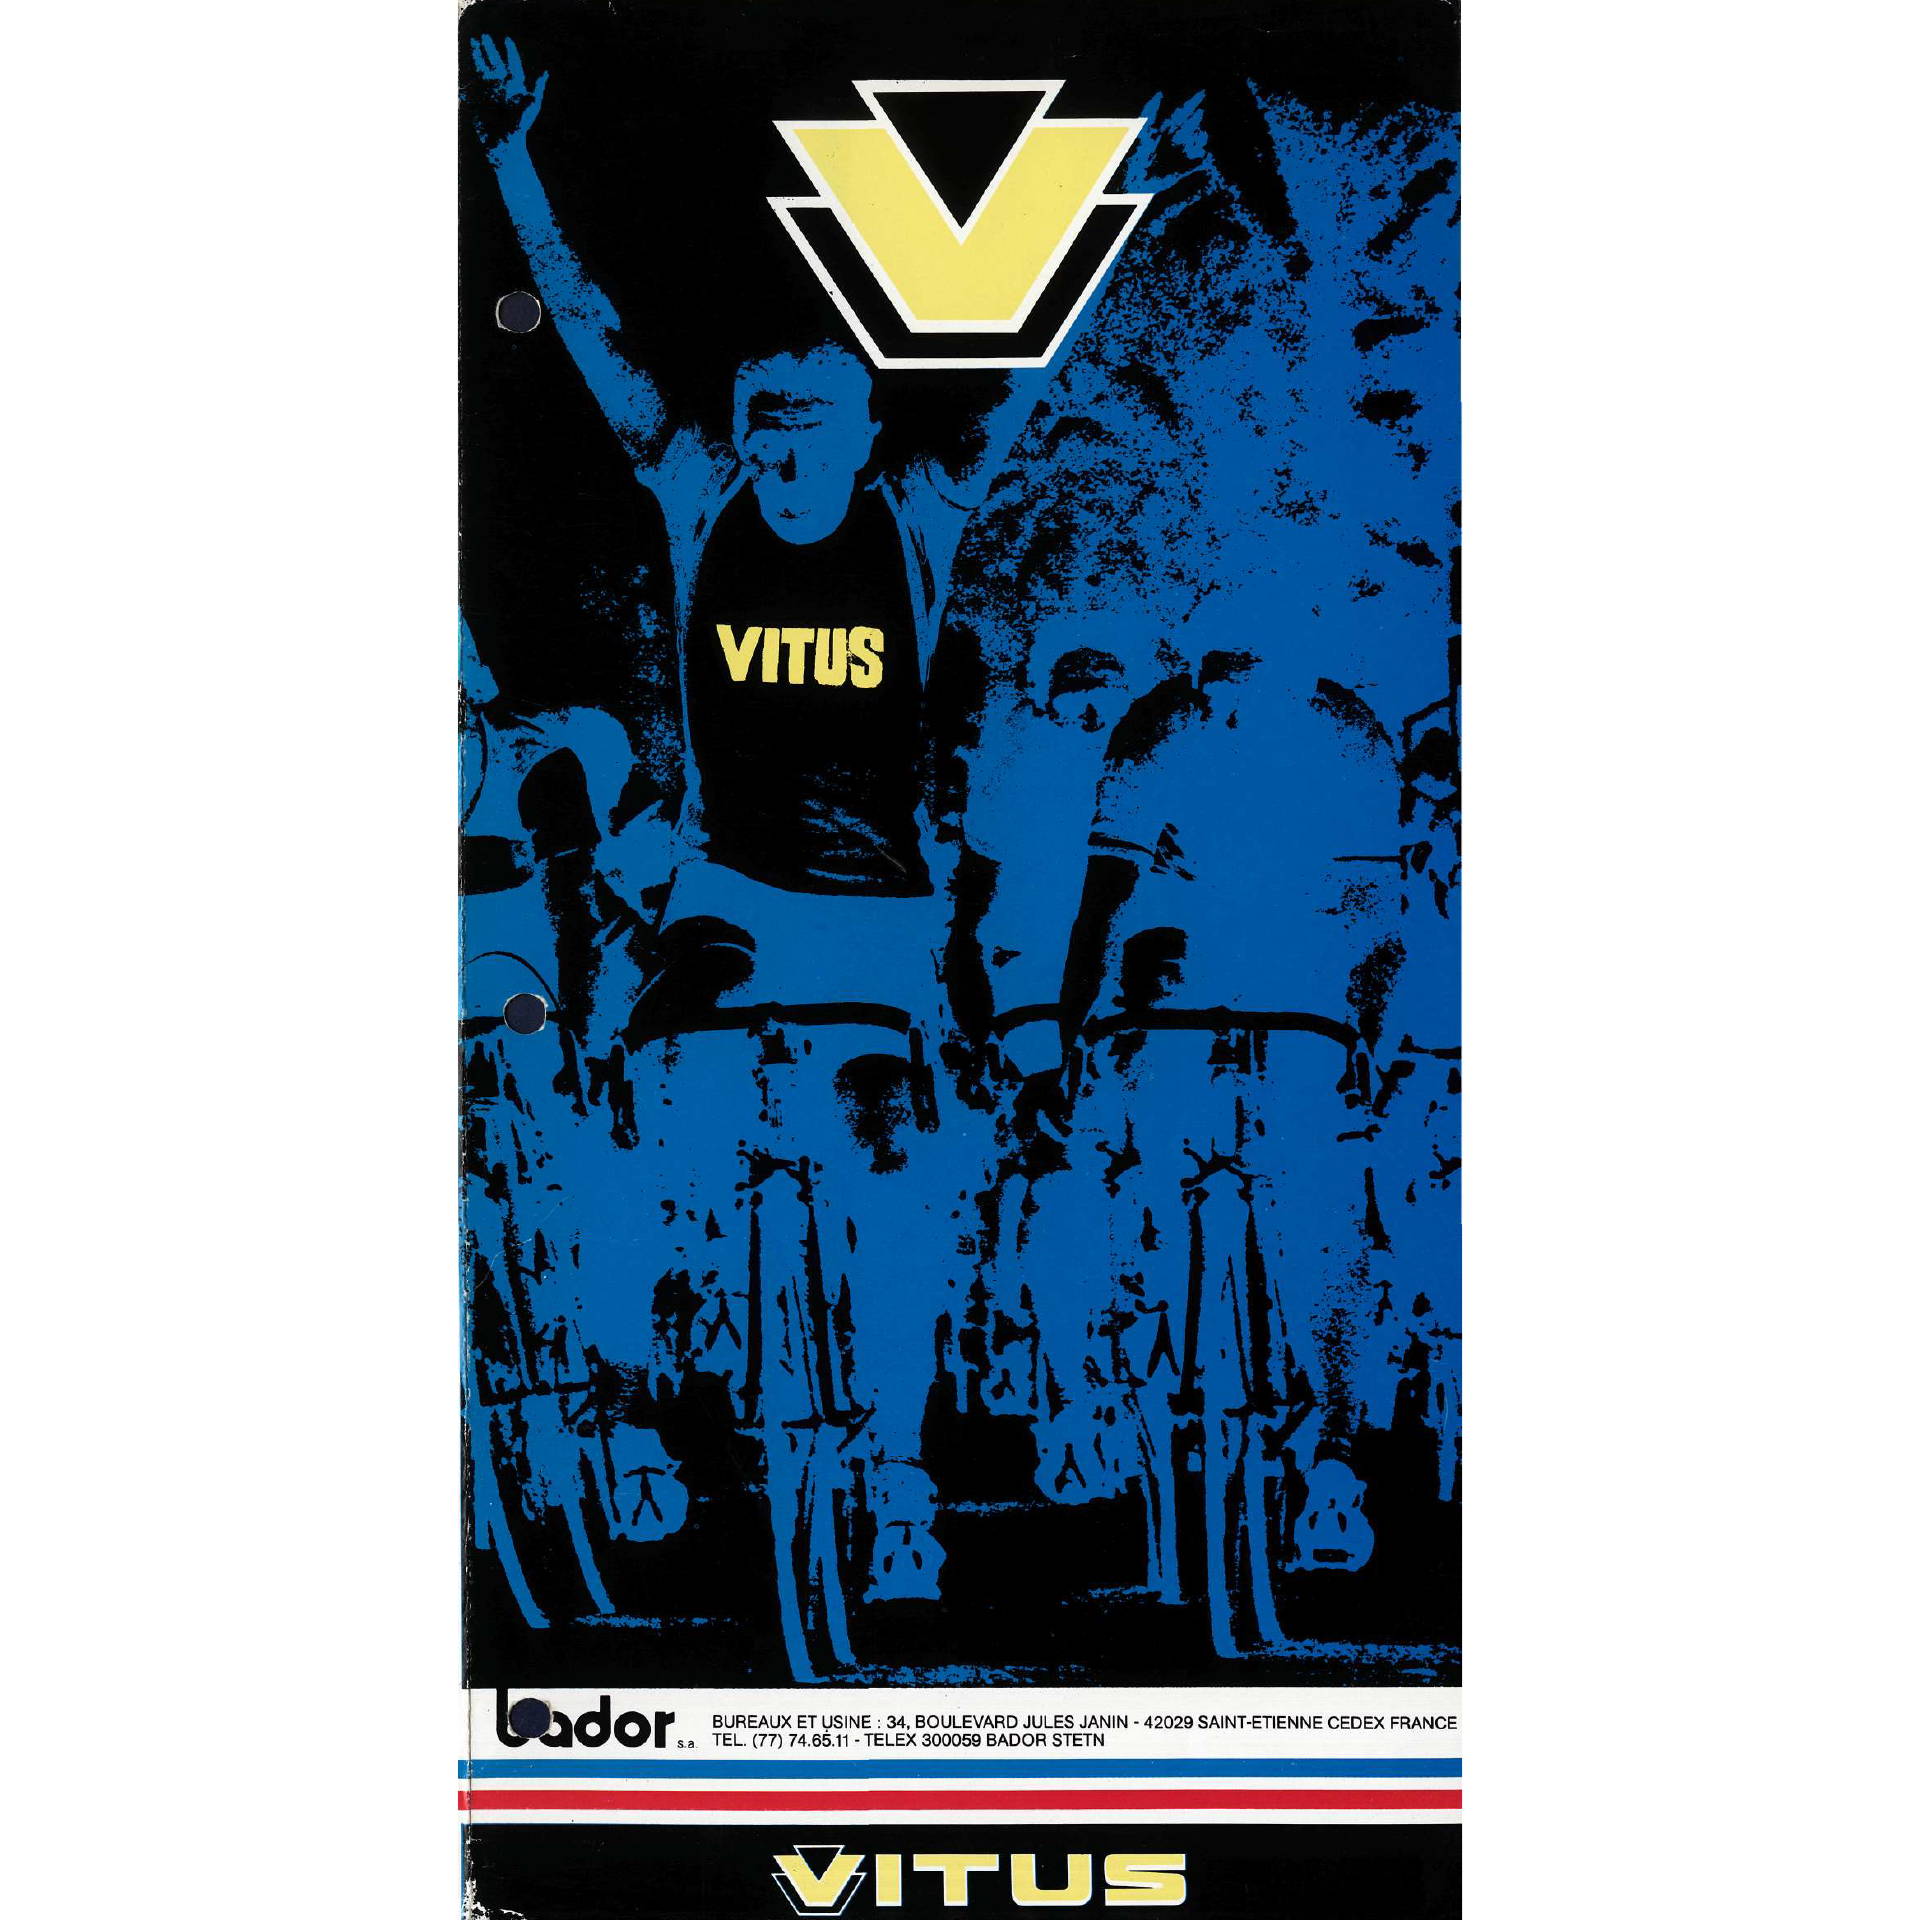 Vitus bicycle catalog